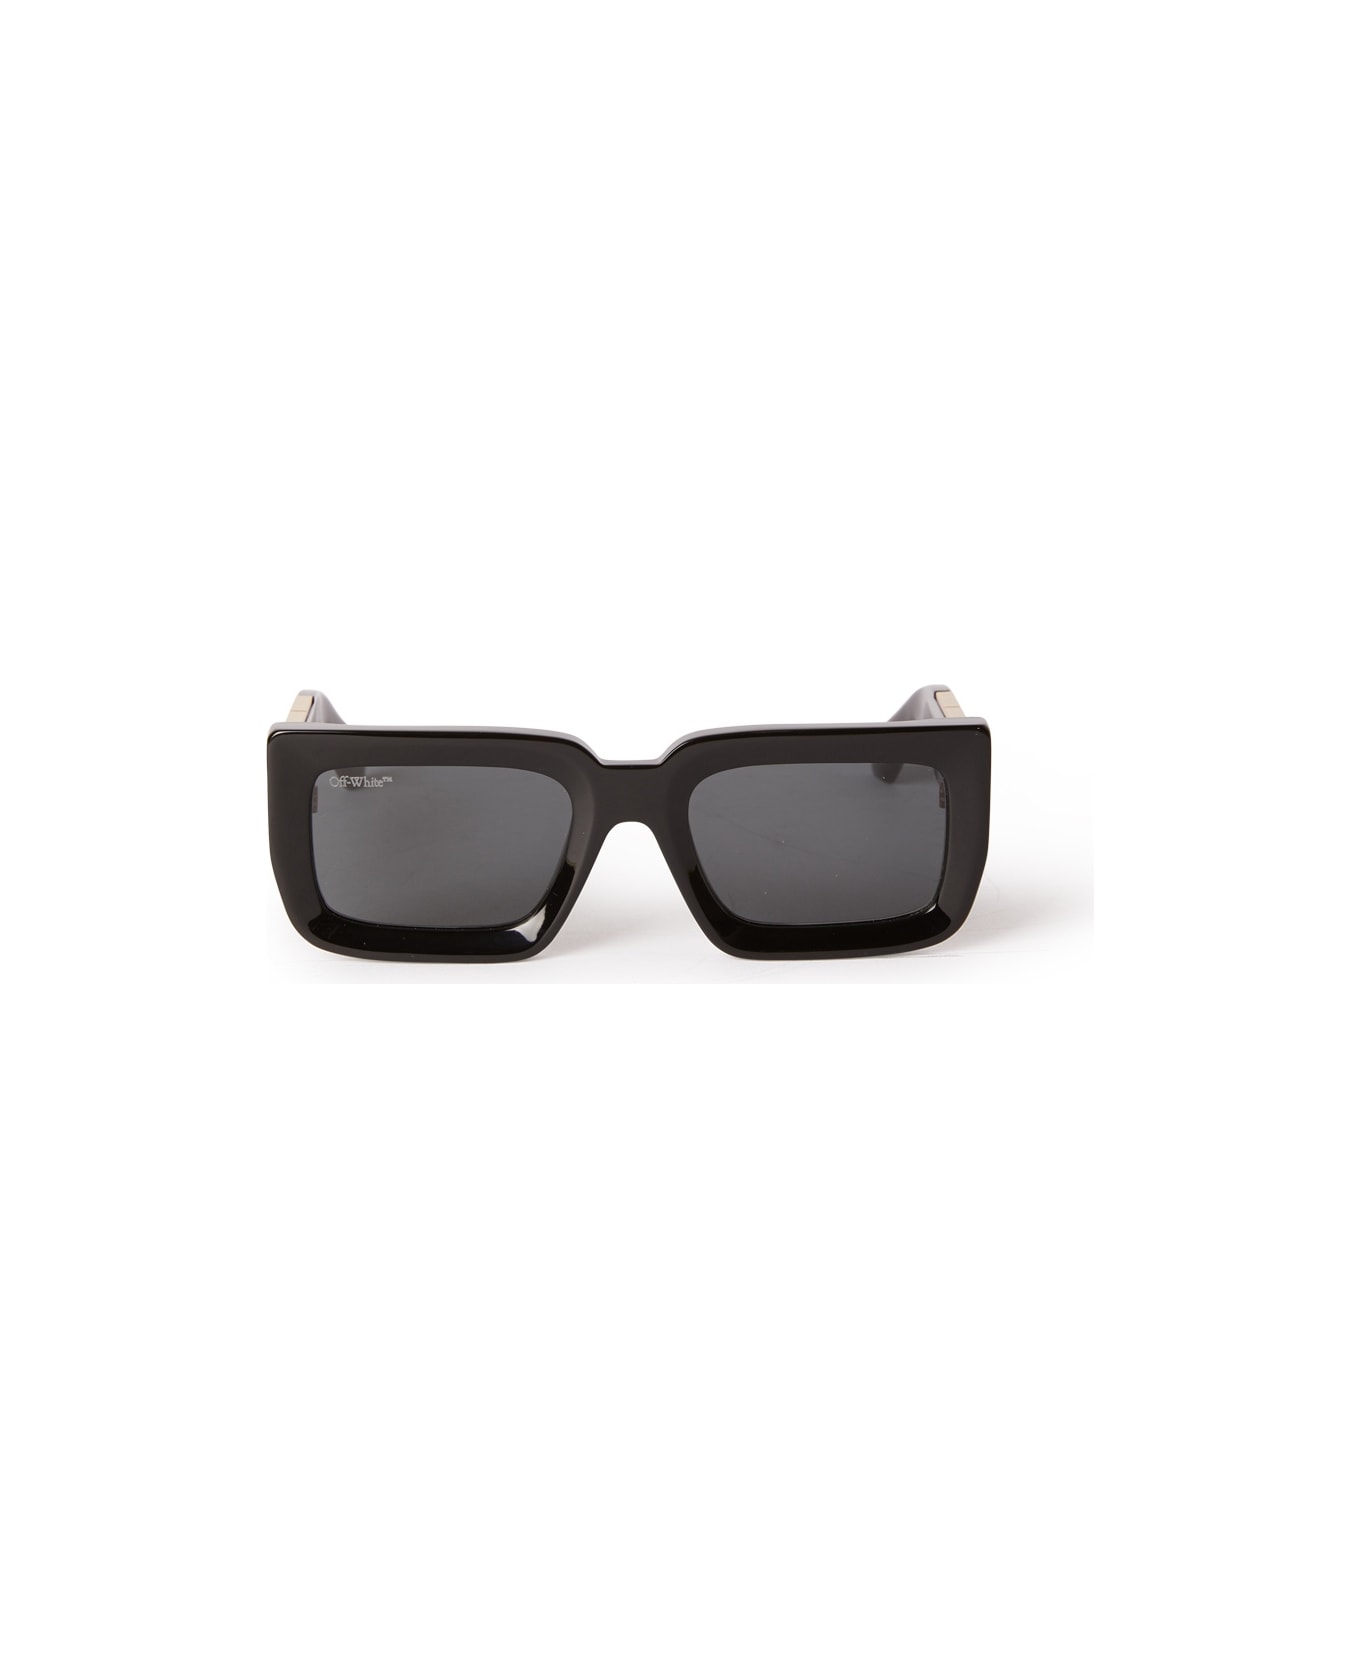 Off-White BOSTON SUNGLASSES Sunglasses - Black サングラス